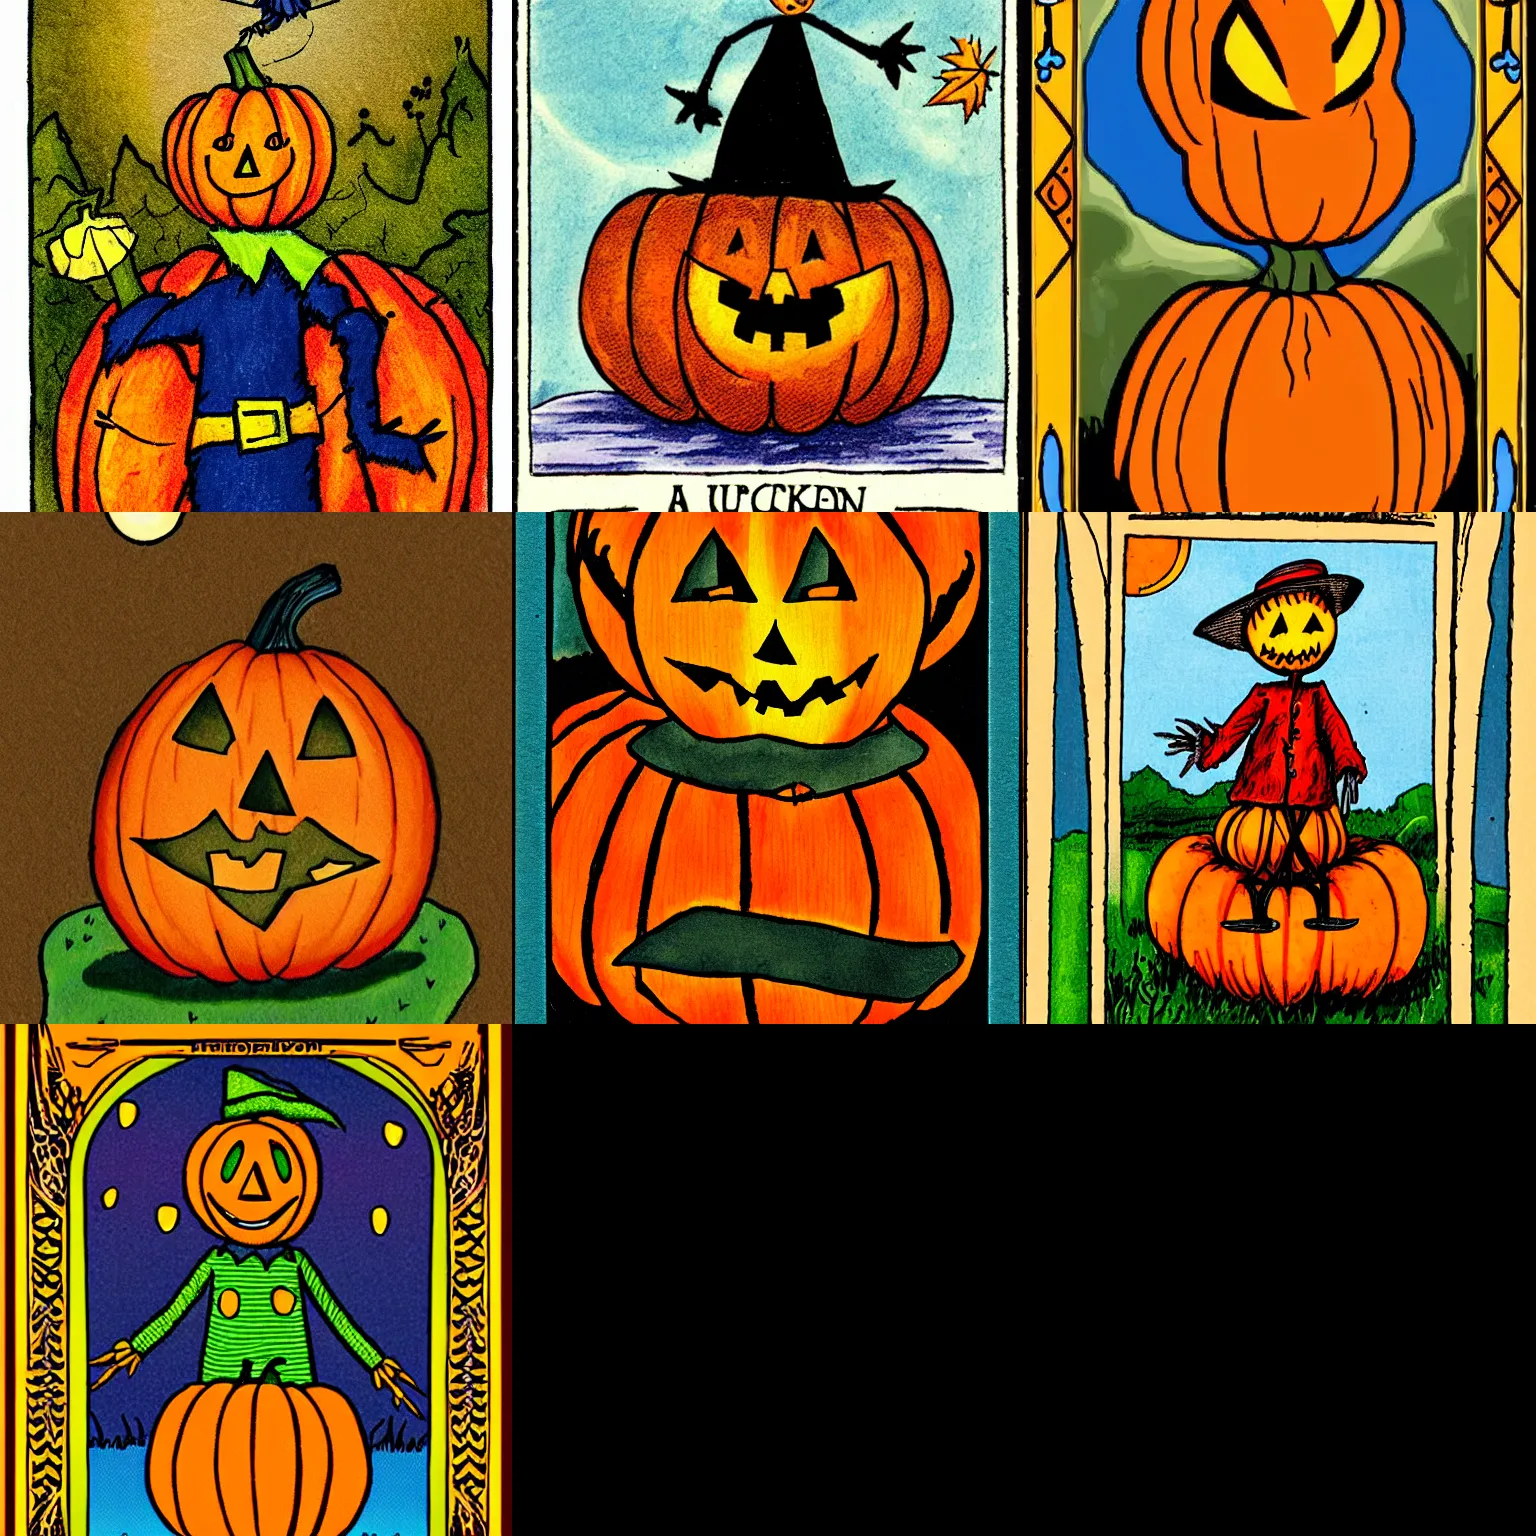 Prompt: a tarot card of a pumpkin-headed scarecrow